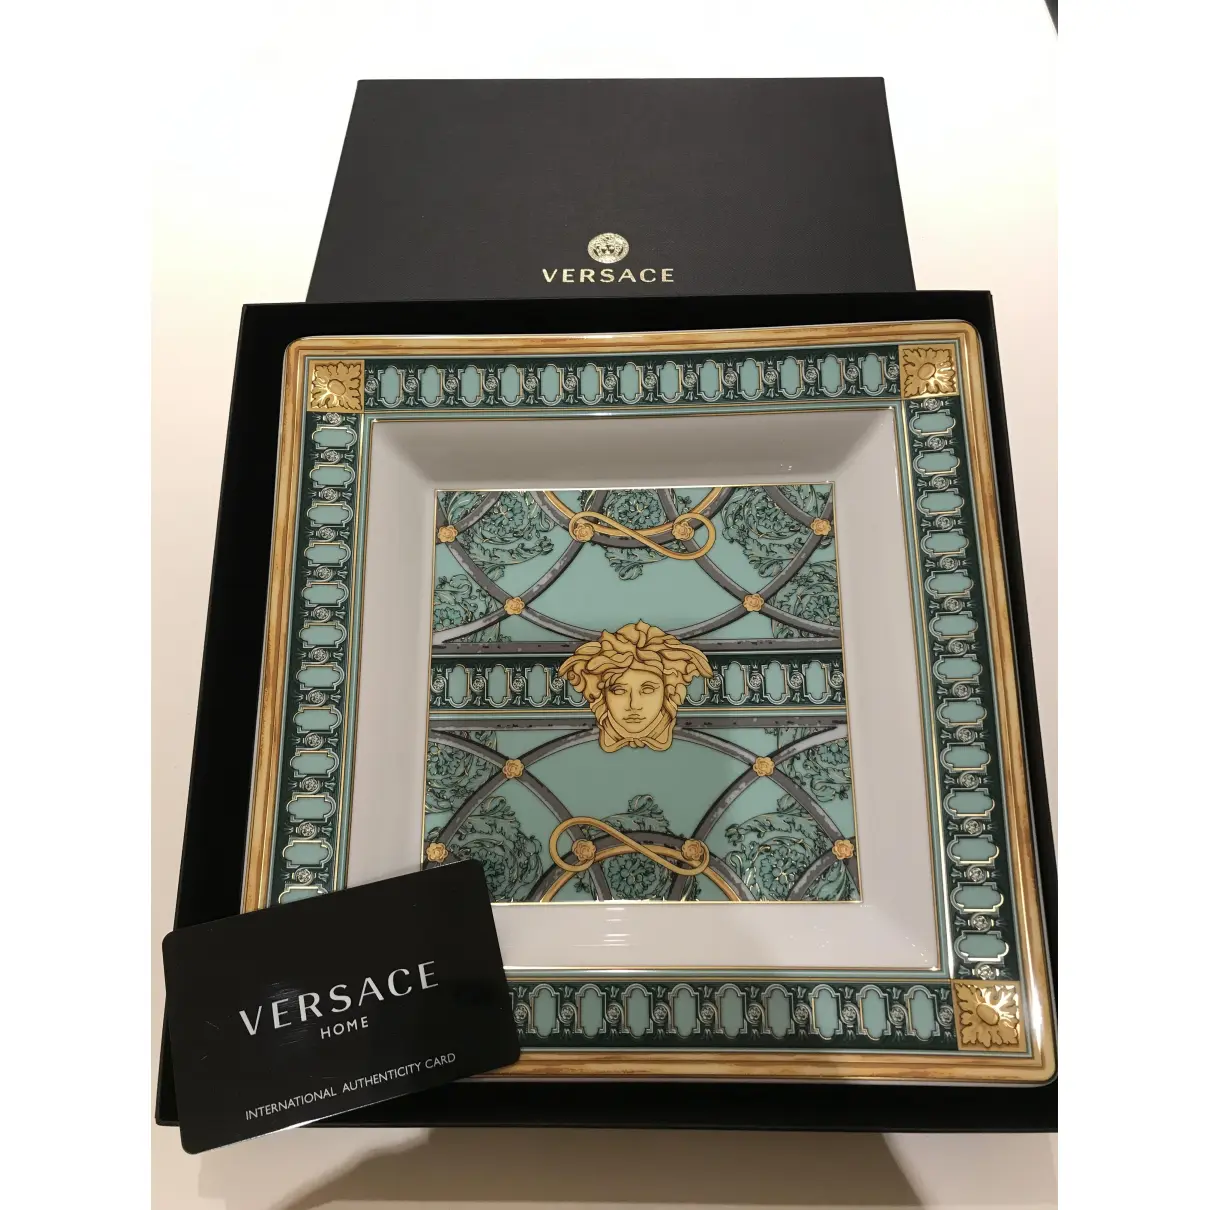 Buy Versace Porcelain ashtray online